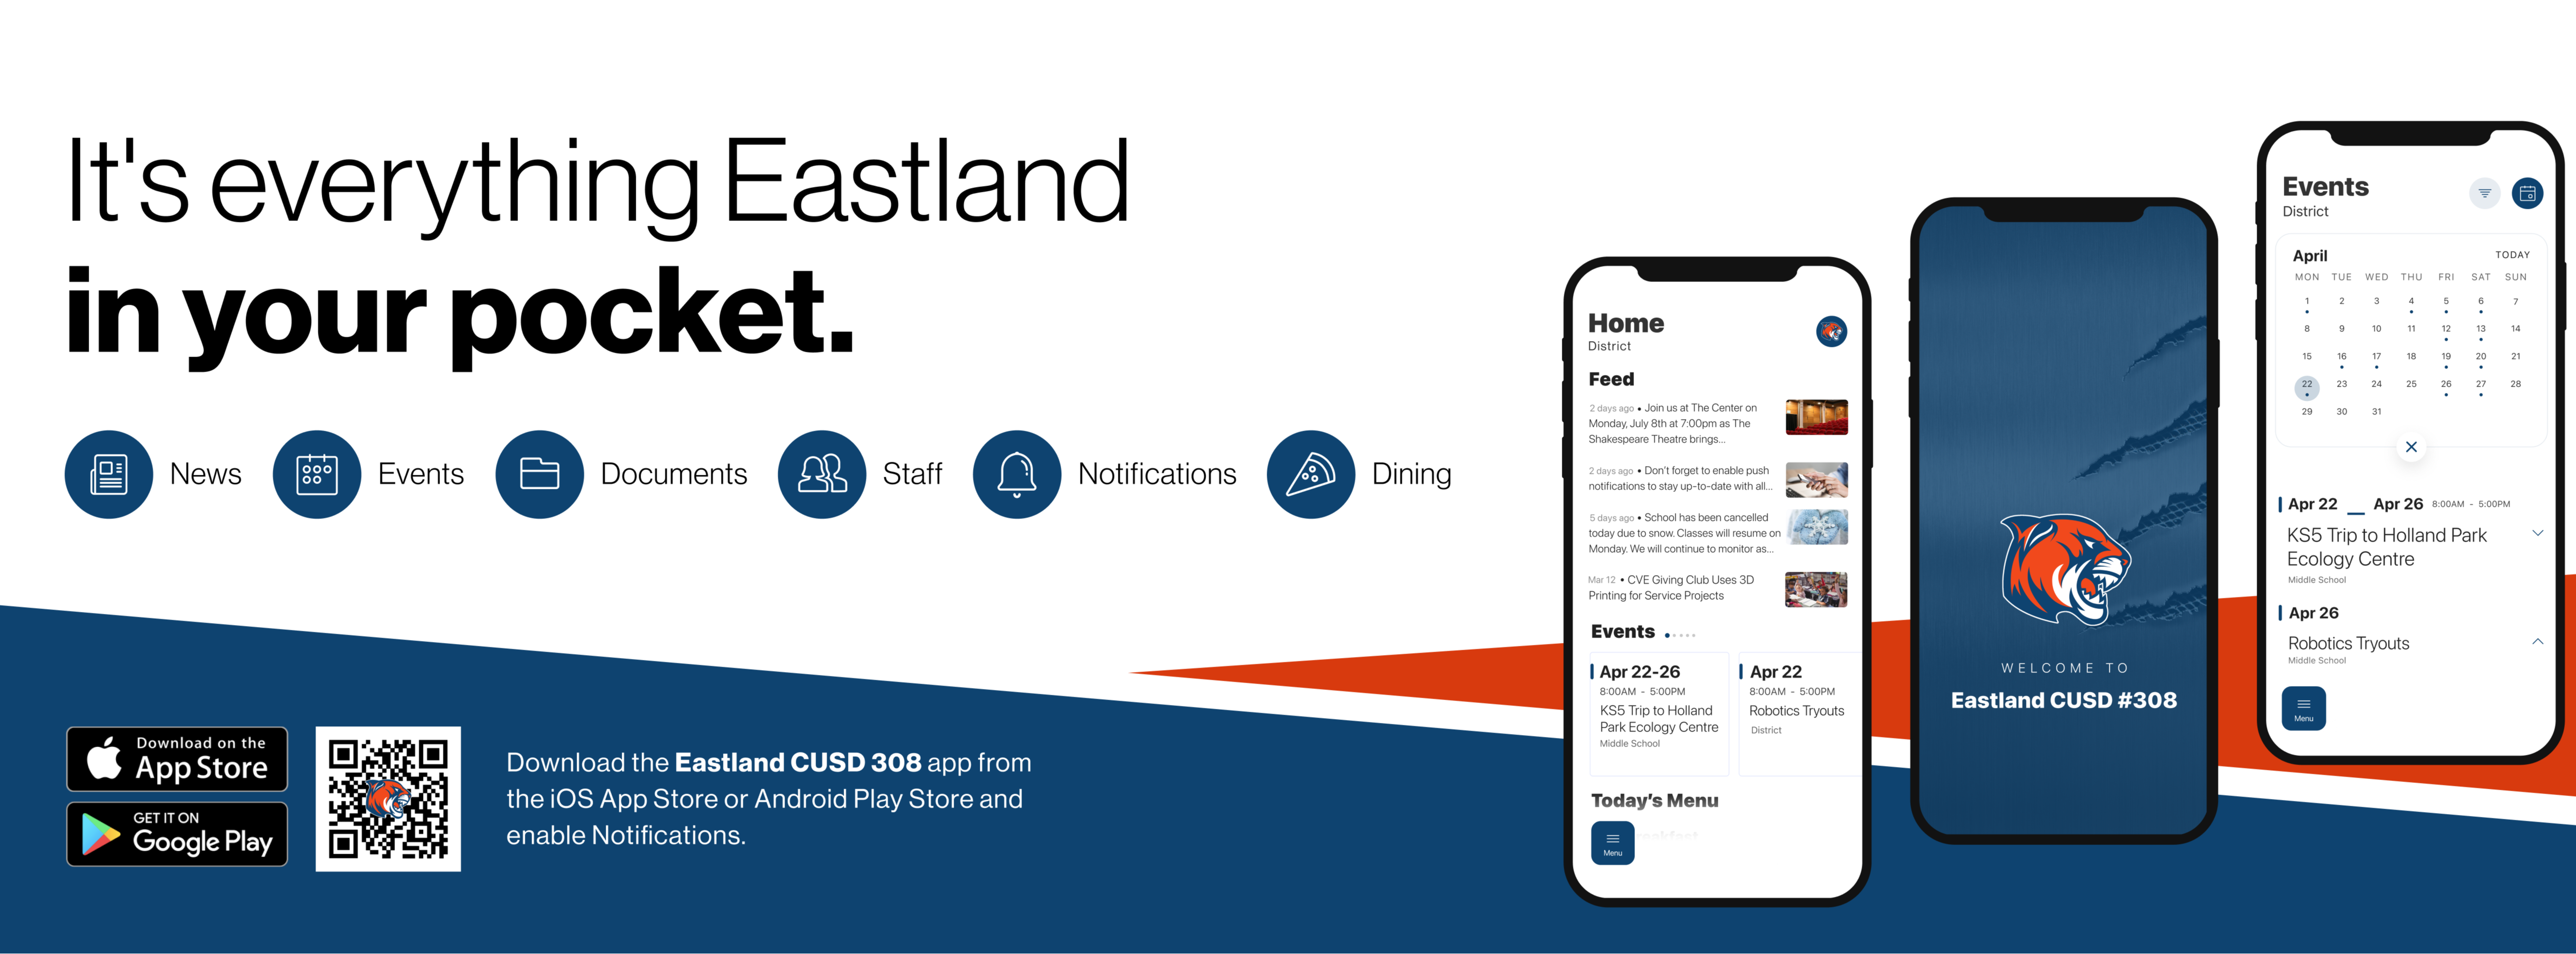 Eastland Launches App